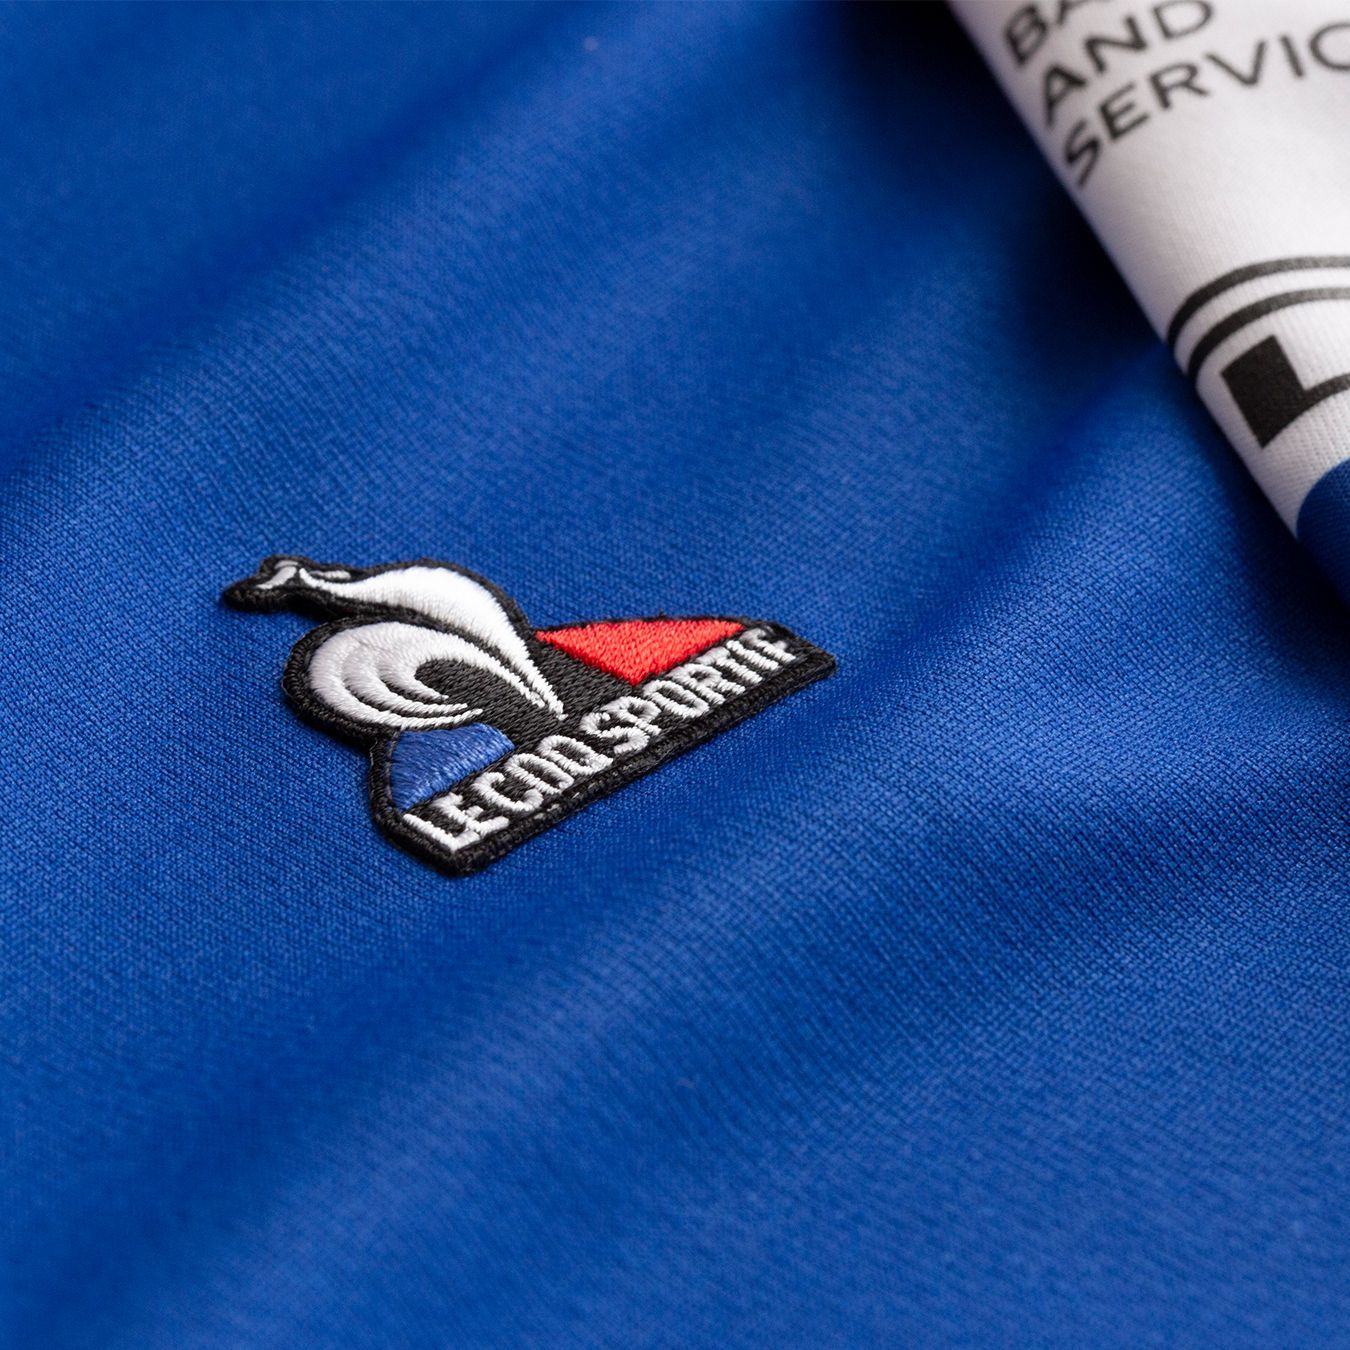 T-shirt maillot femme ALPINE F1 Fernando Alonso 14 bleu vue zoom logo Le Coq Sportif